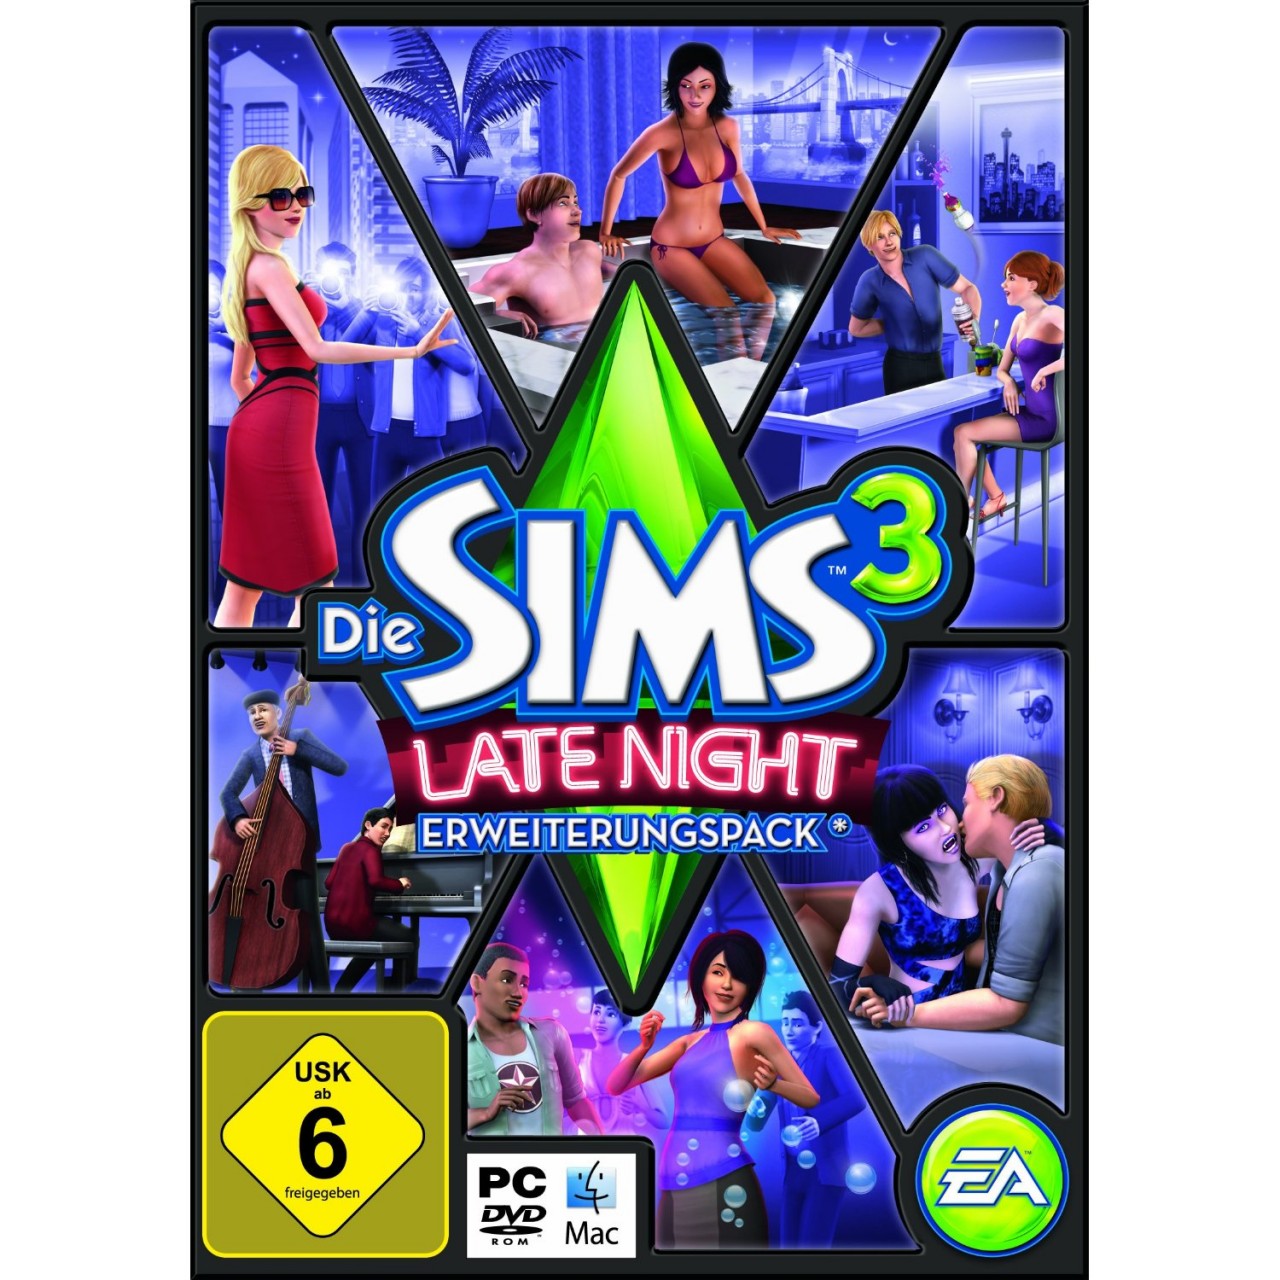 The Sims 3 Late Night KeyOrigin (REGION FREE/MULTILANG)